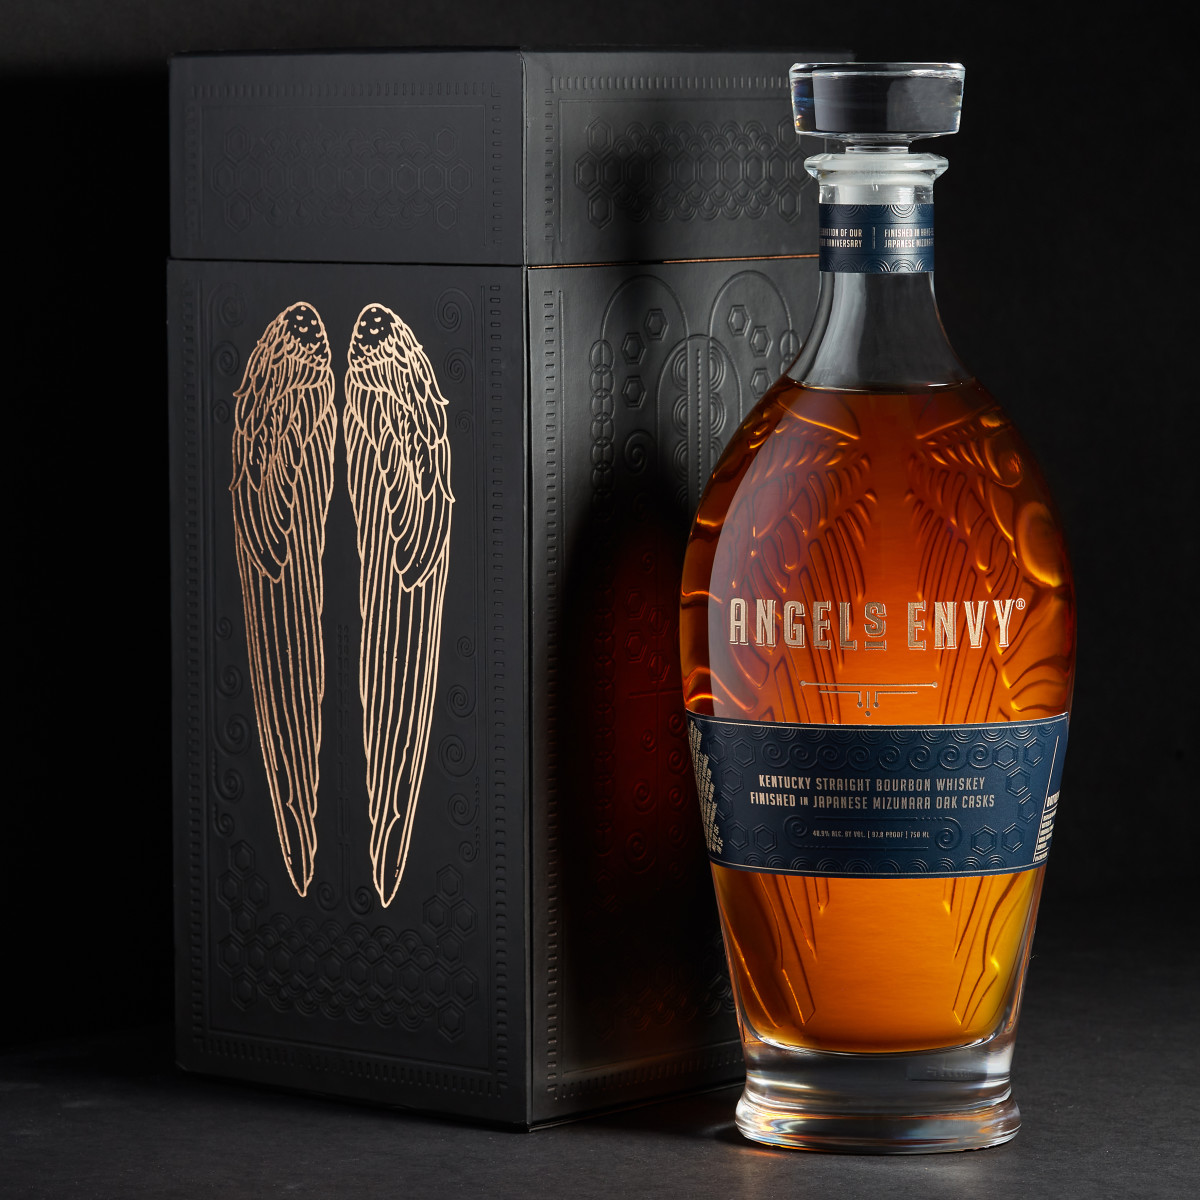 Angel’s Envy Kentucky Straight Bourbon Whiskey Finished in Japanese Mizunara Oak Casks